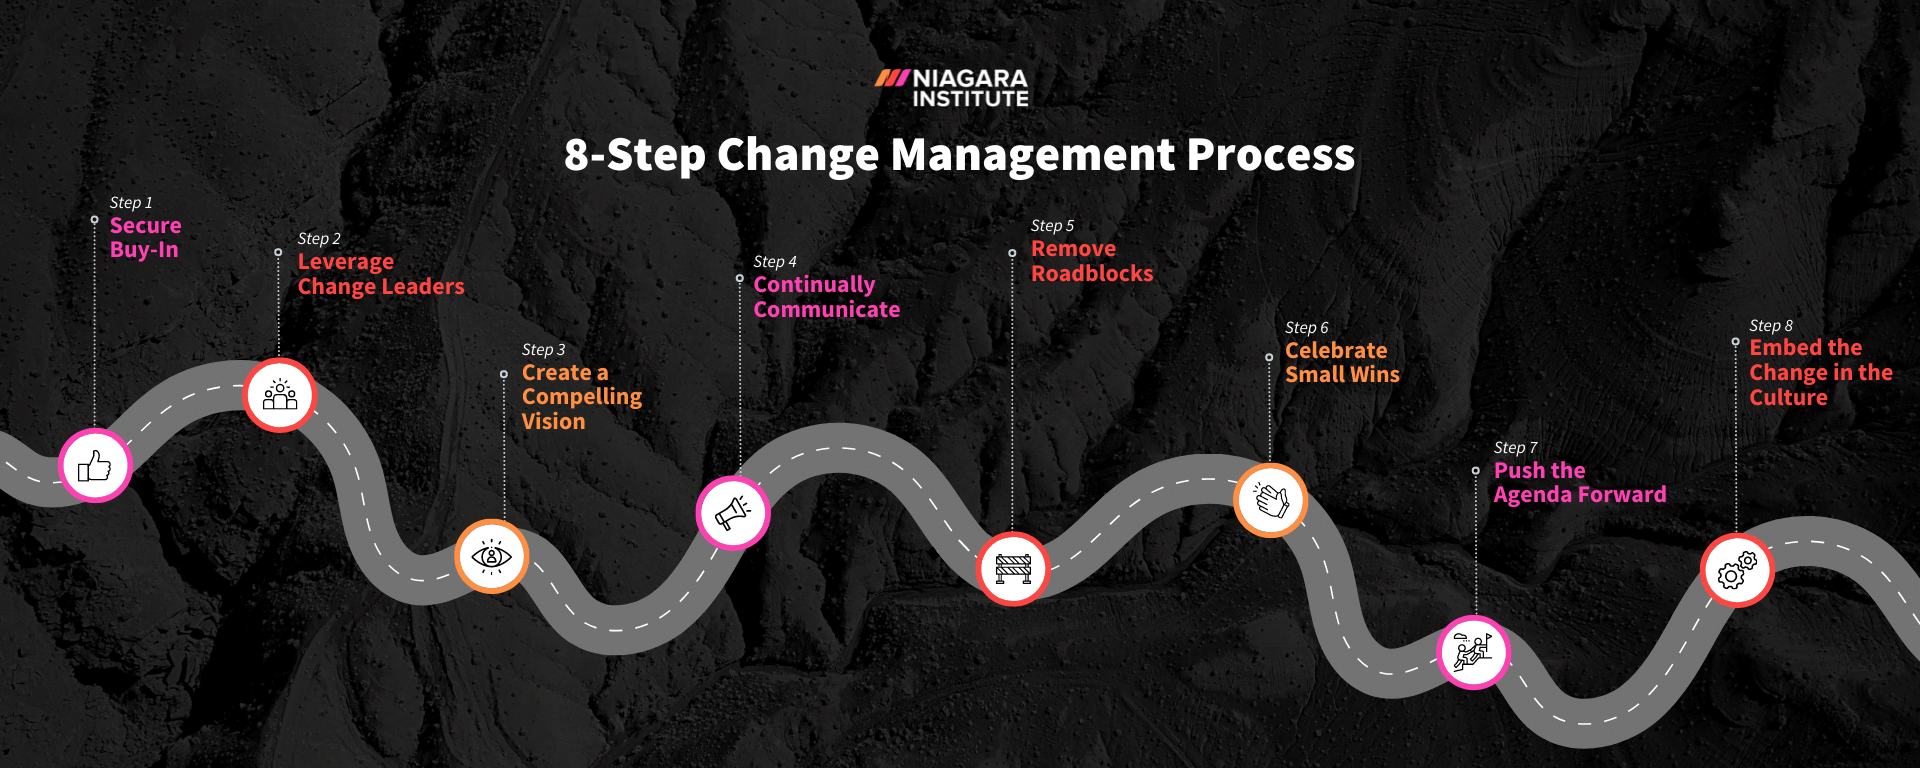 Niagara Institute - 8-Step Change Management Process